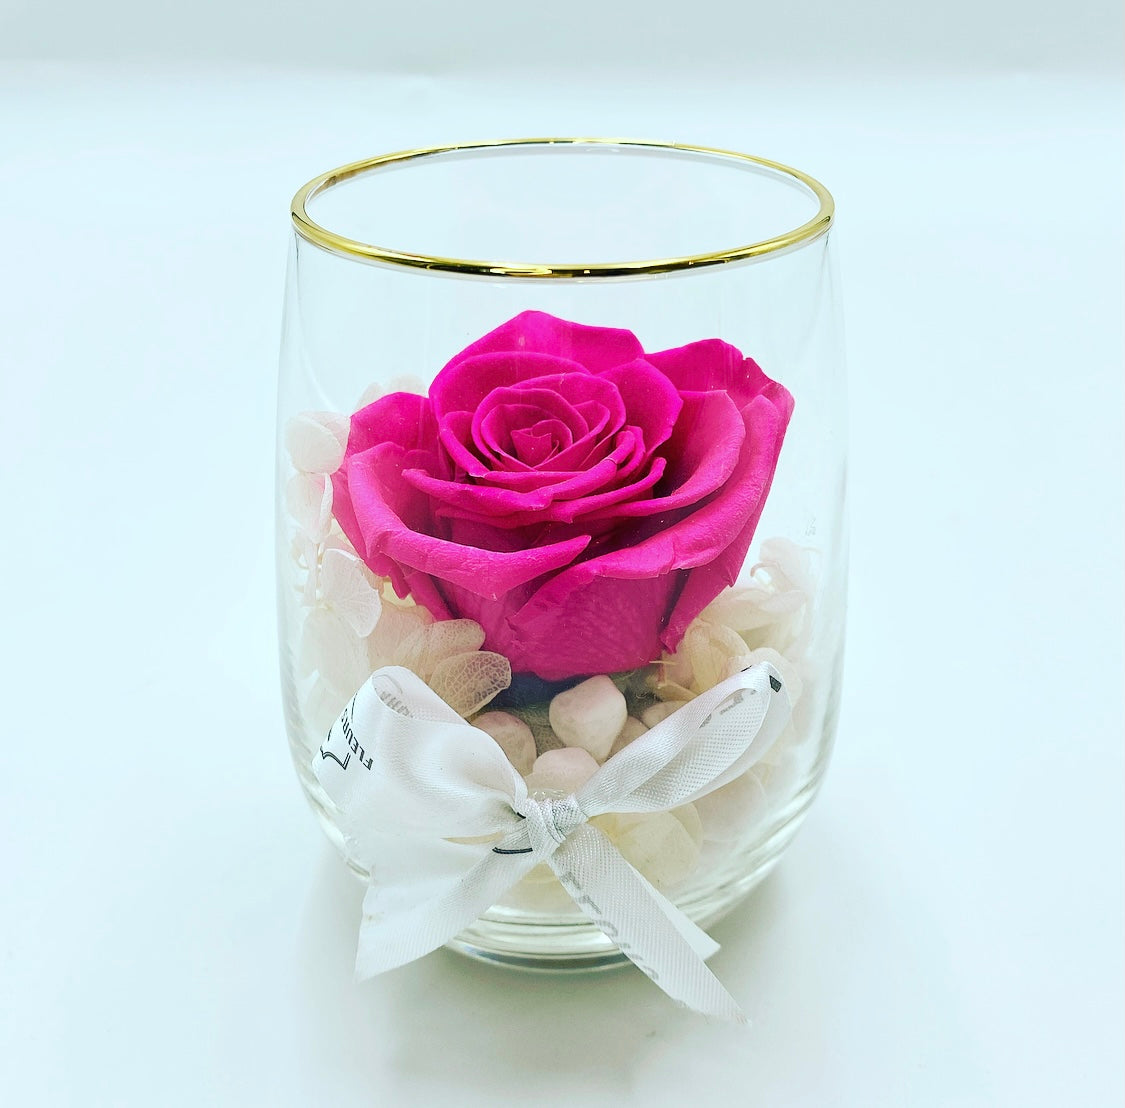 One Love in Round Glass Vase